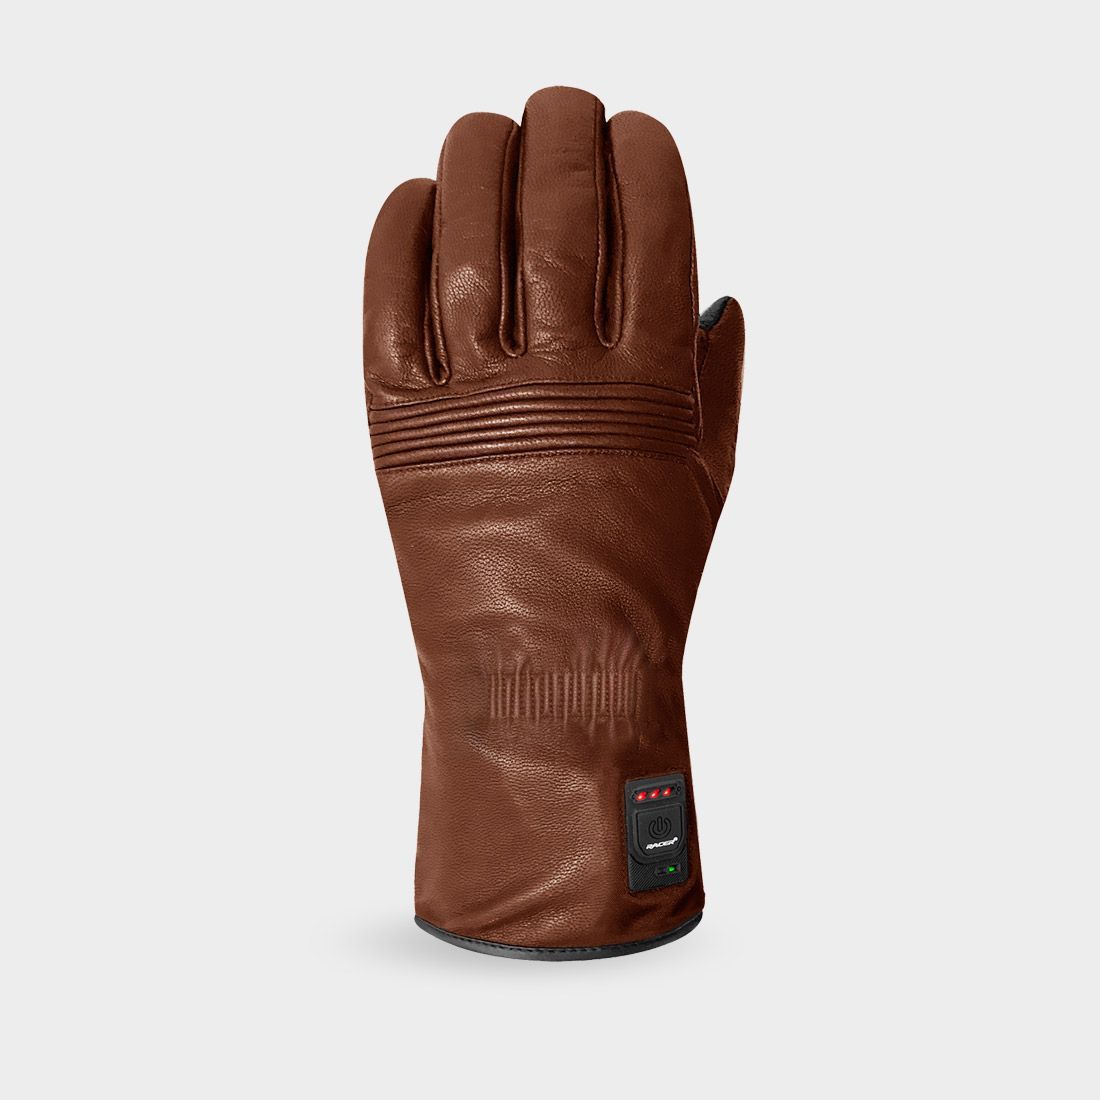 IWARM CITY 2 - Heated Gloves